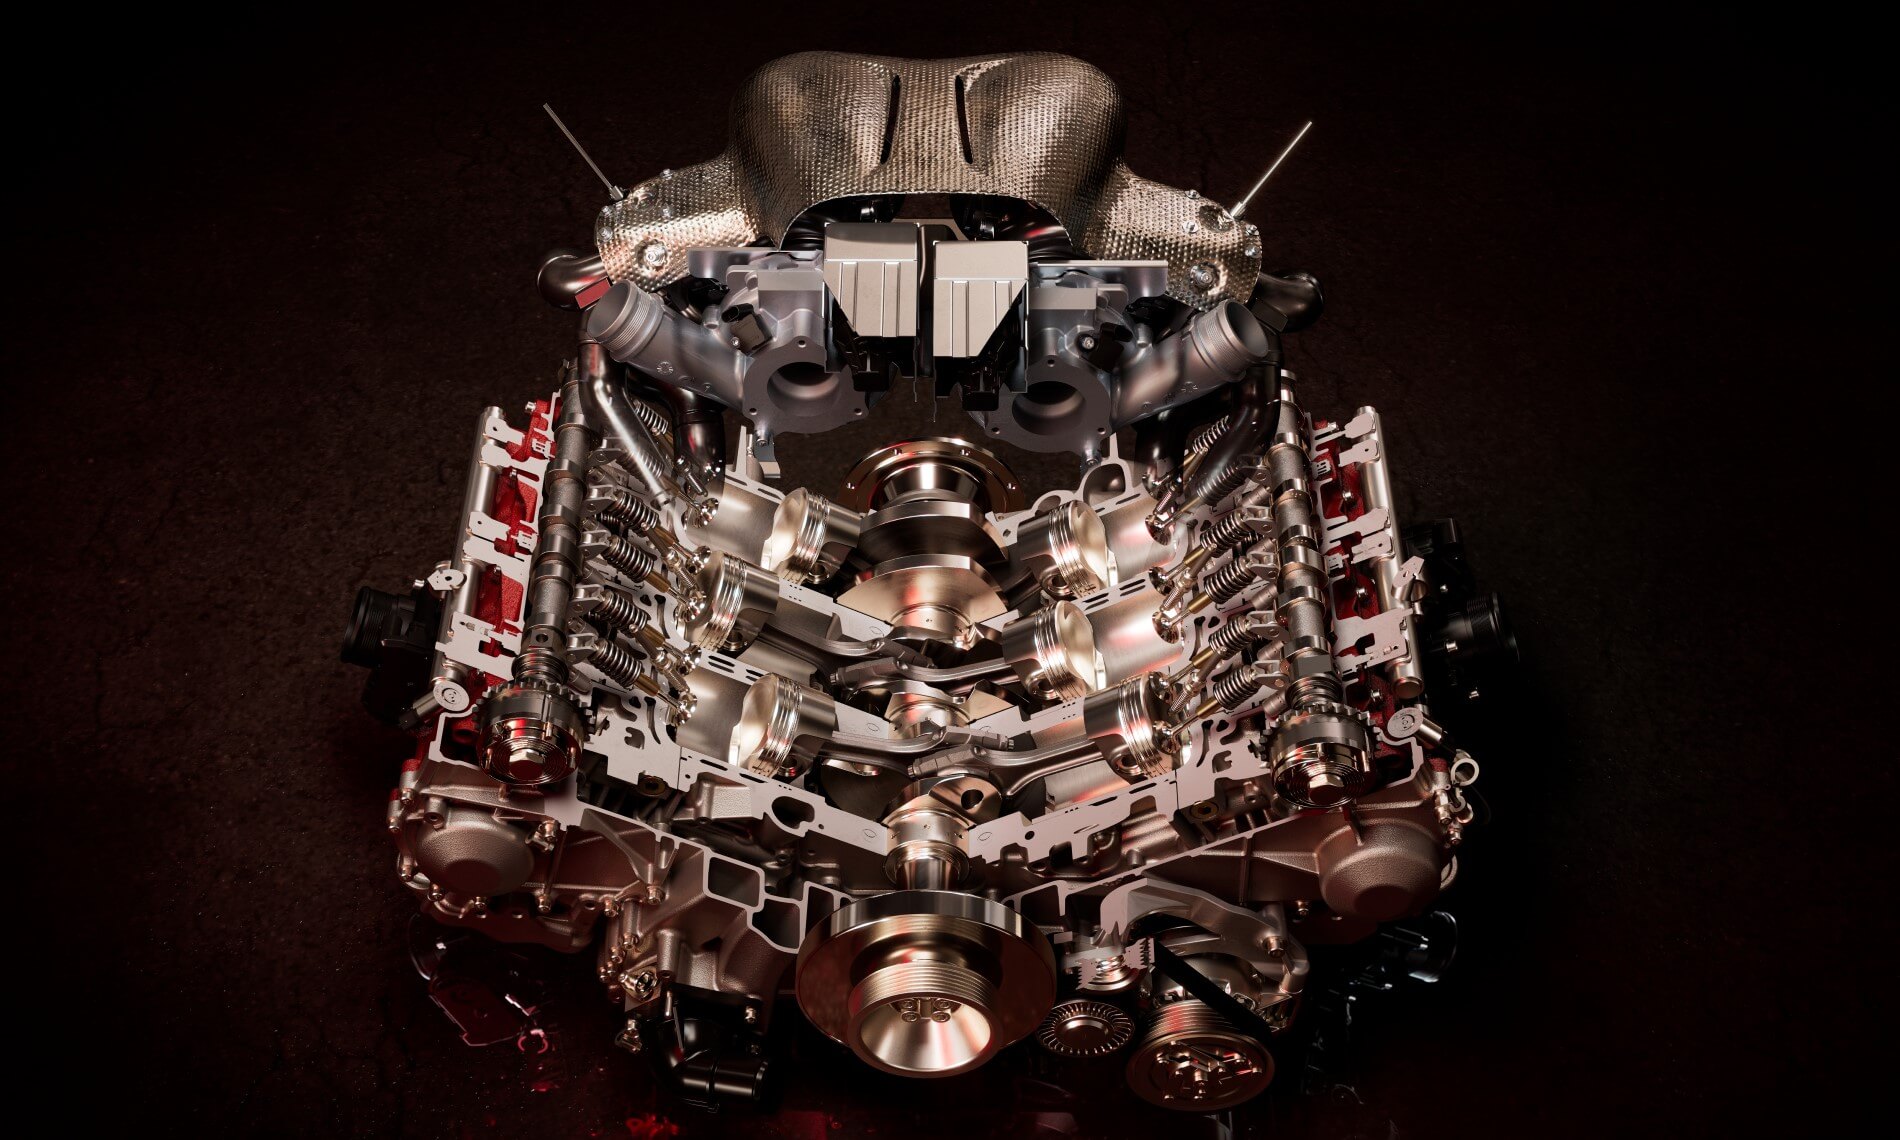 Ferrari 296 GT3 engine